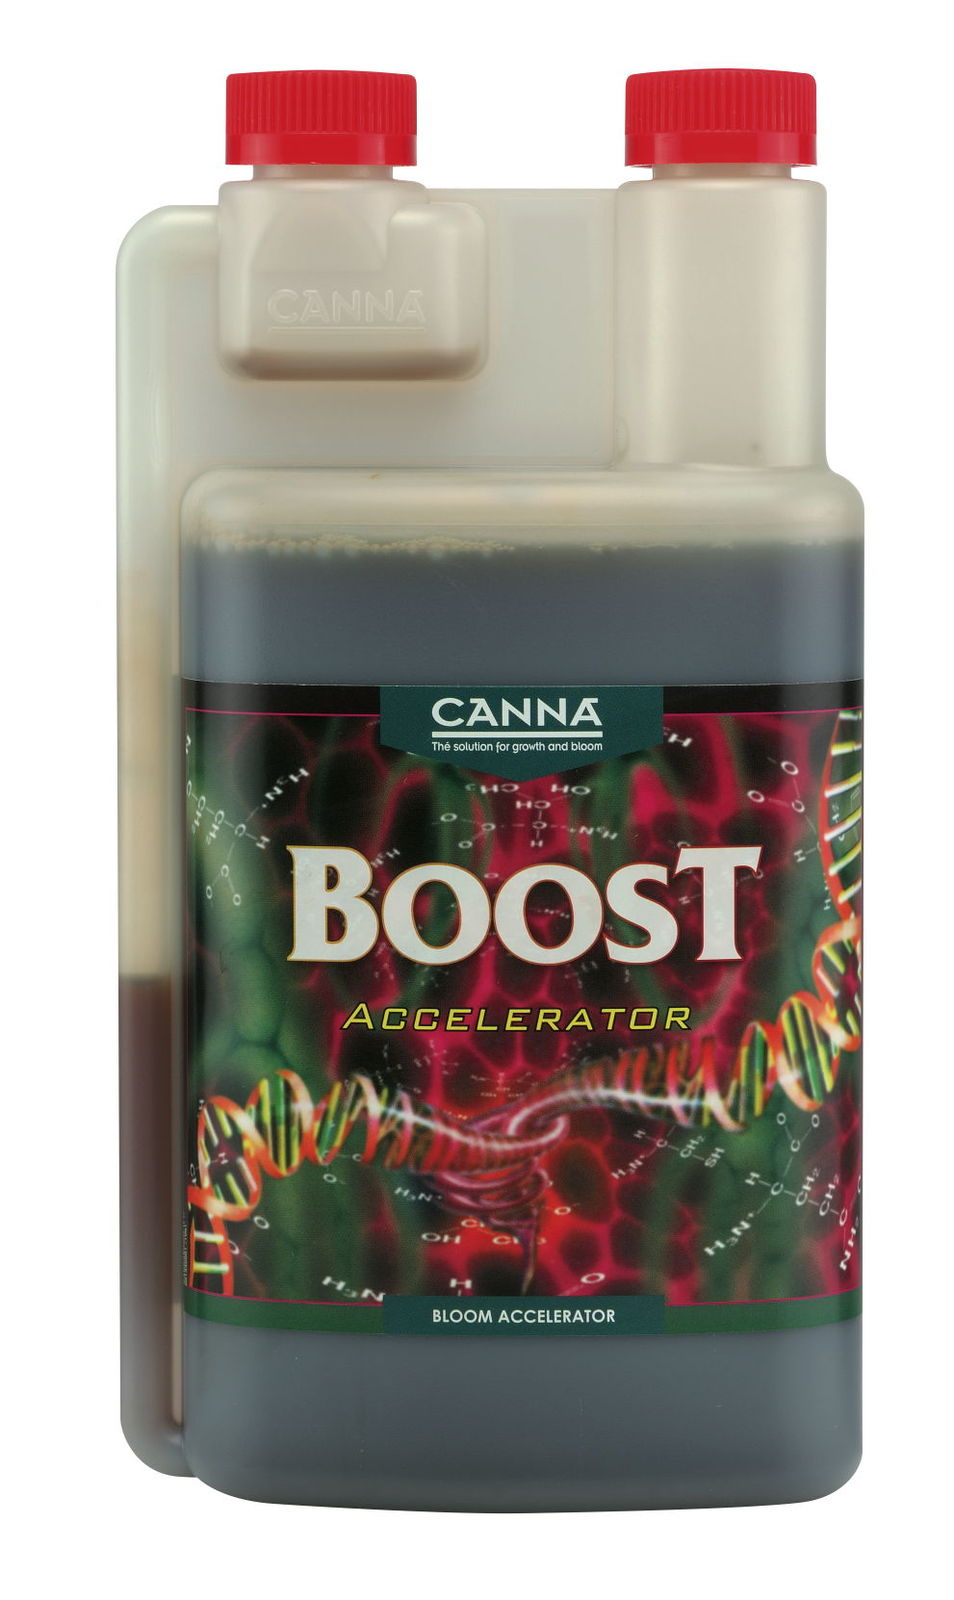 Canna Boost 1Ltr Accelerator - amazing flowering accelerator - c10